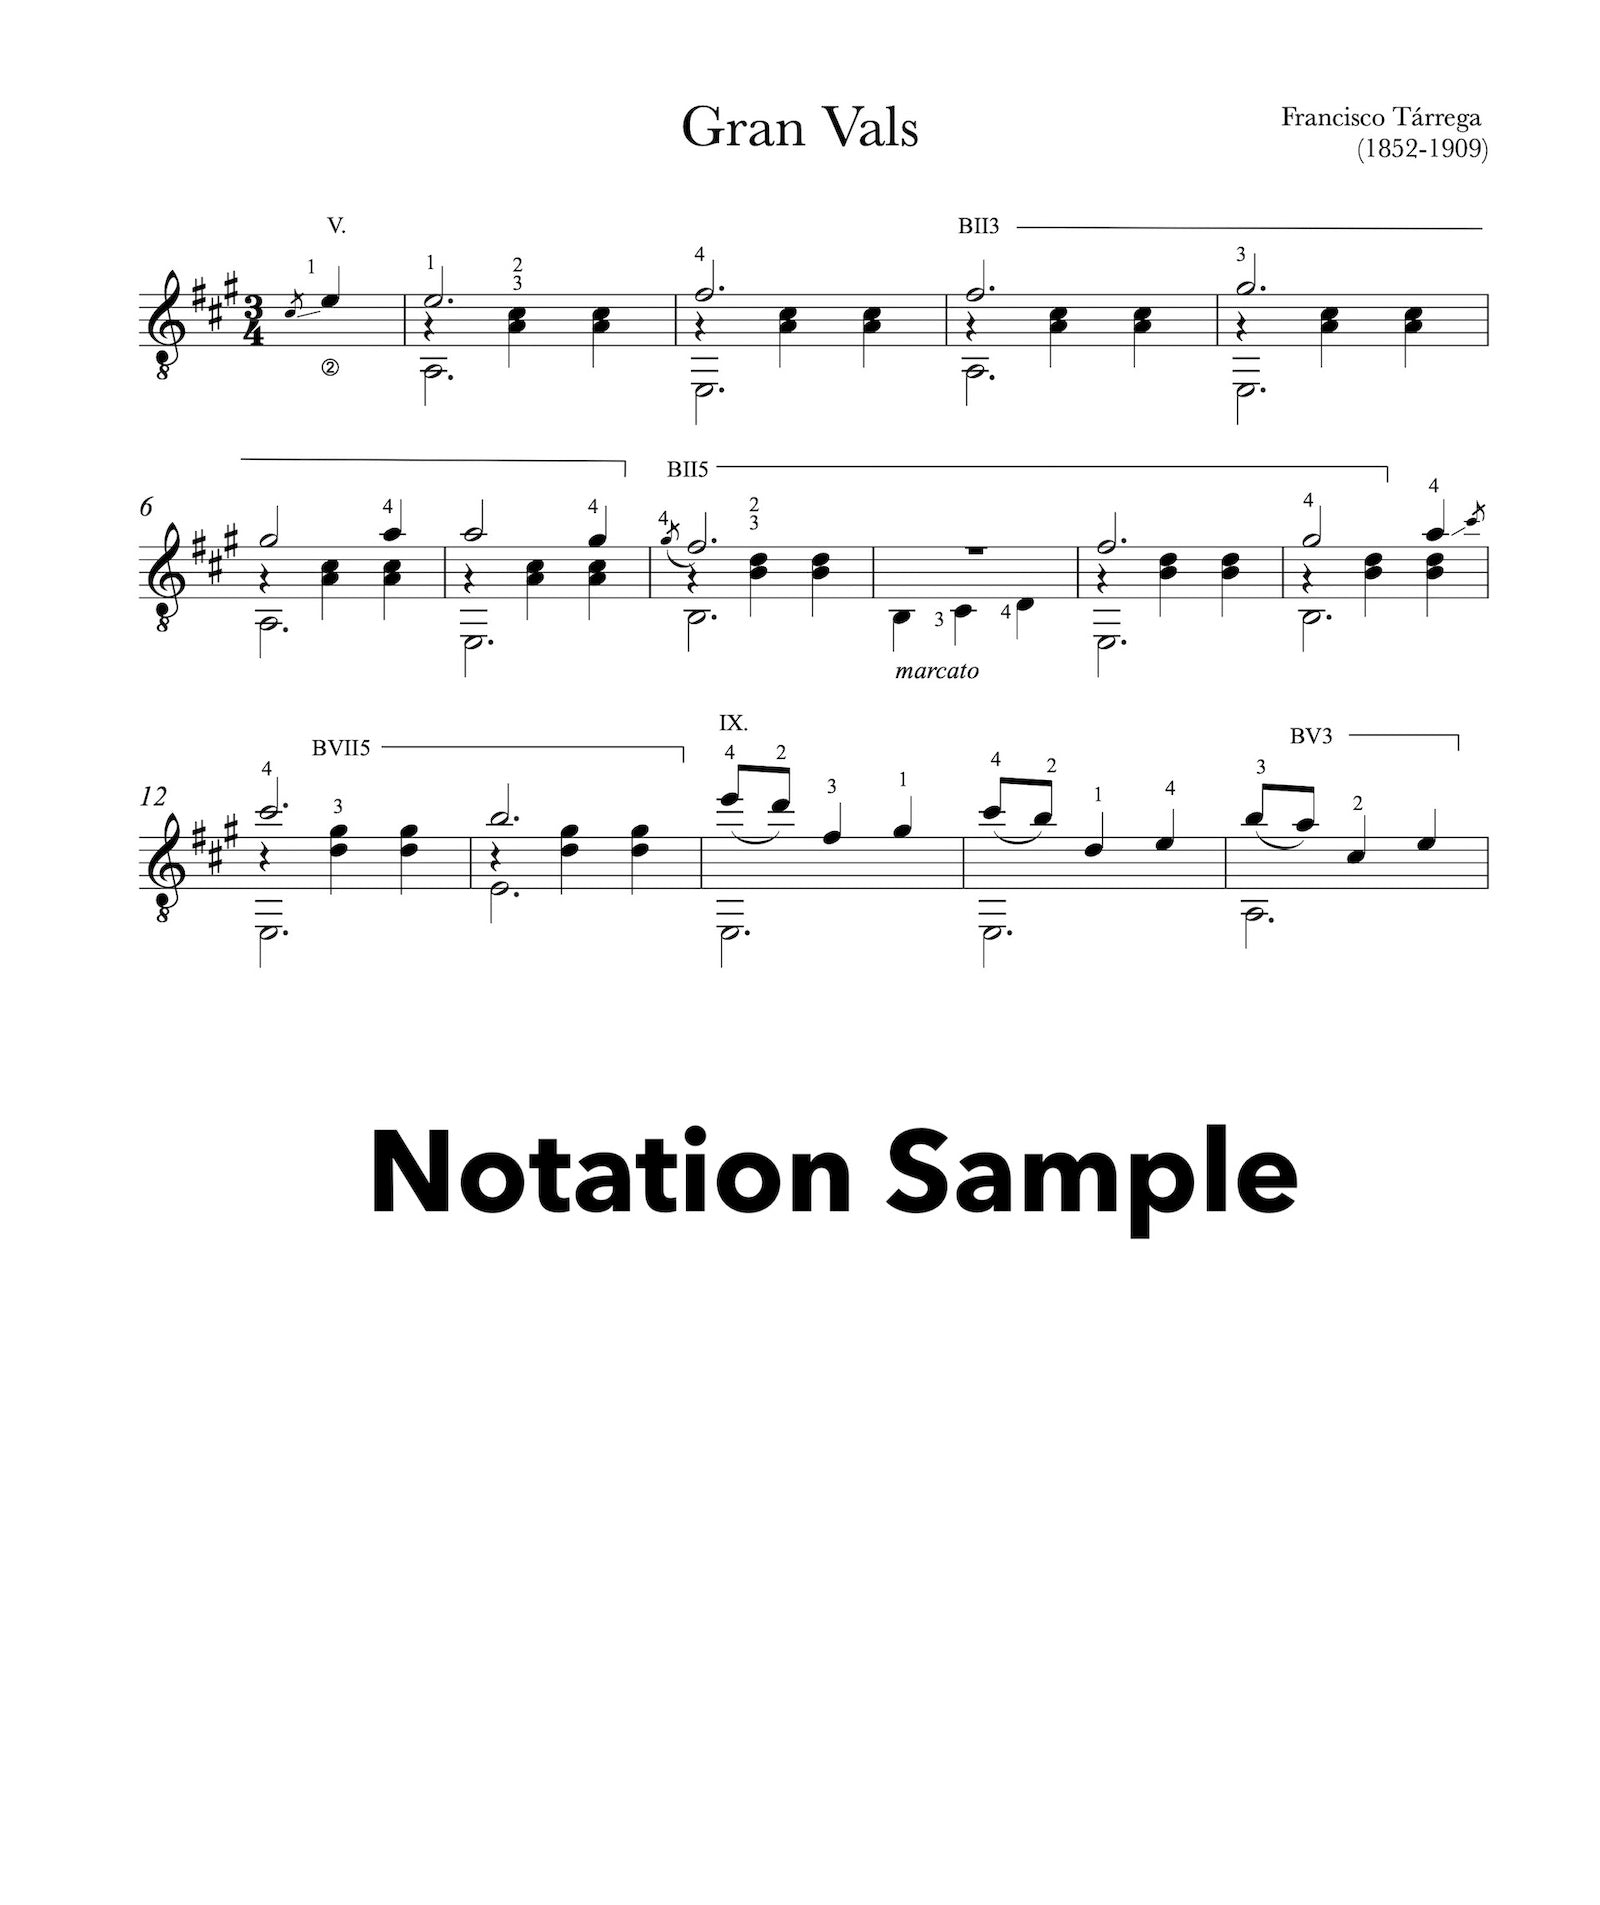 Gran Vals by Tarrega - Notation Sample